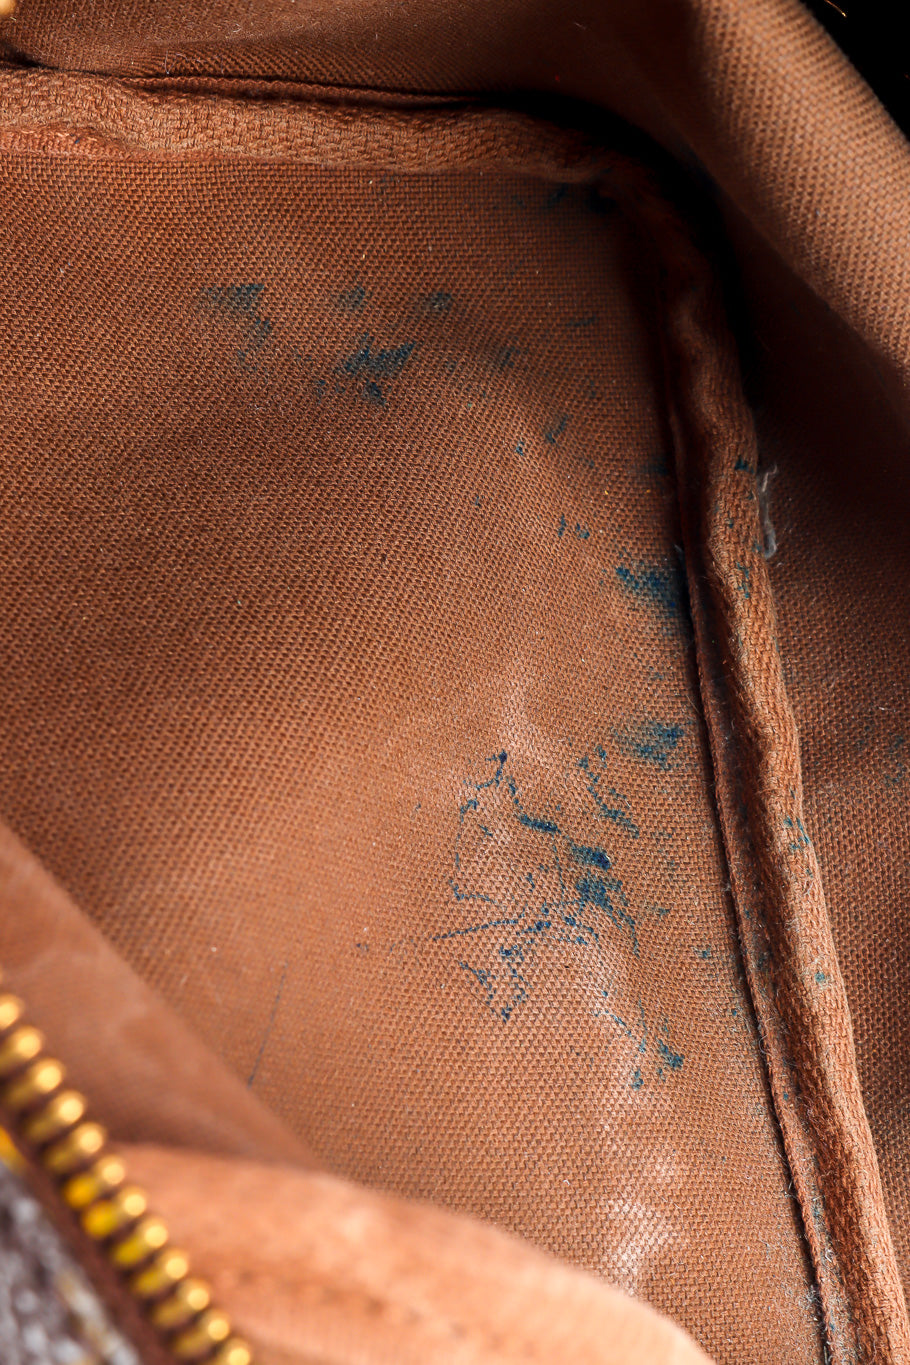 Vintage Louis Vuitton Classic Monogram Speedy 30 Bag II stain on lining closeup @Recessla